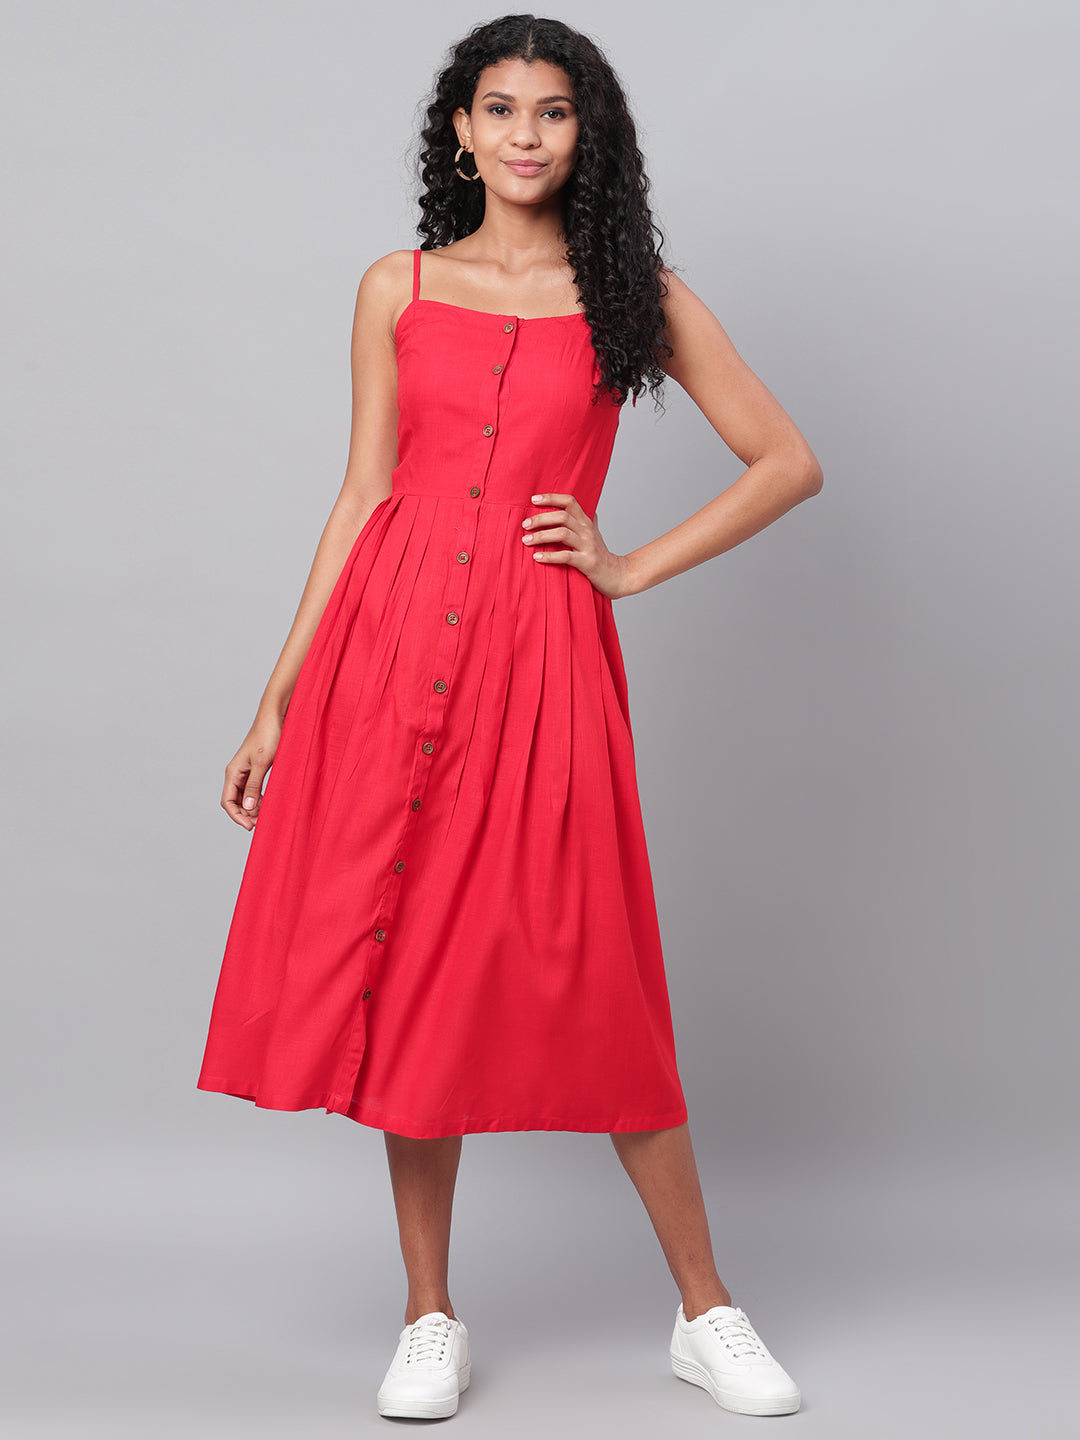 Myshka Women's Red Printed Sleeveless Cotton Slub Streps Neck Casual Dress